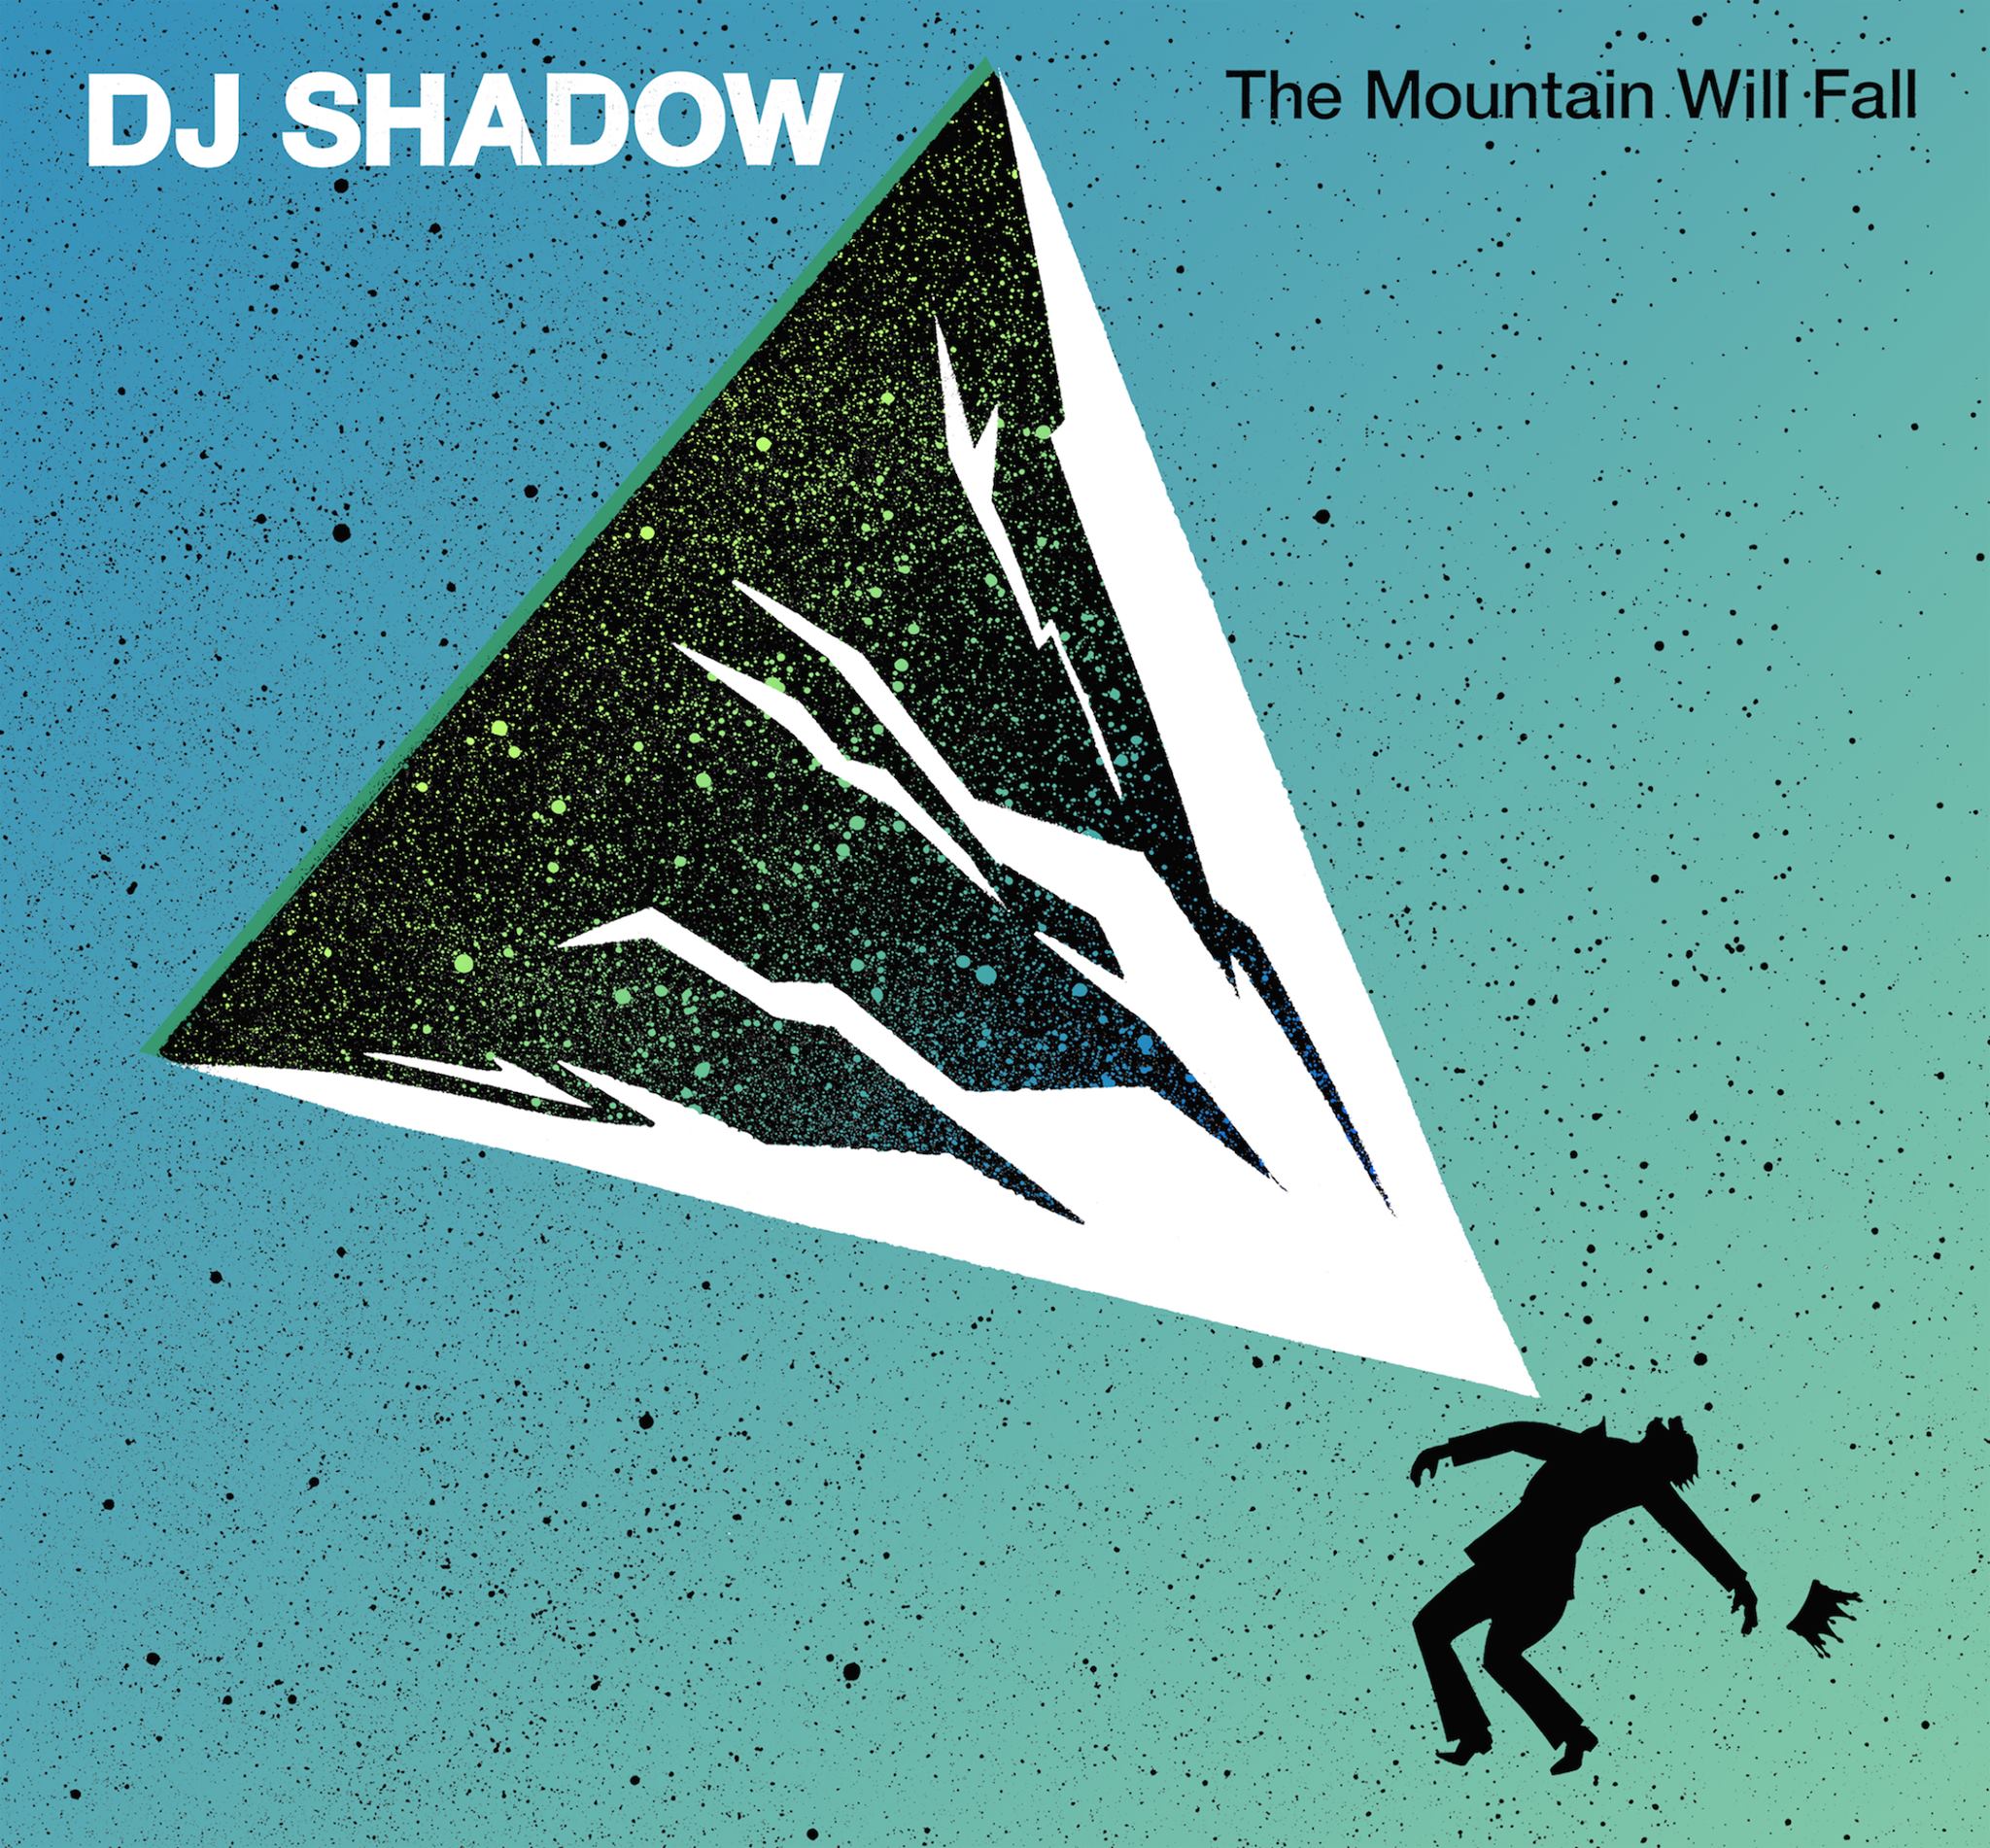 dj-shadow-the-mountain-will-fall-album-cover-art-2016.jpg